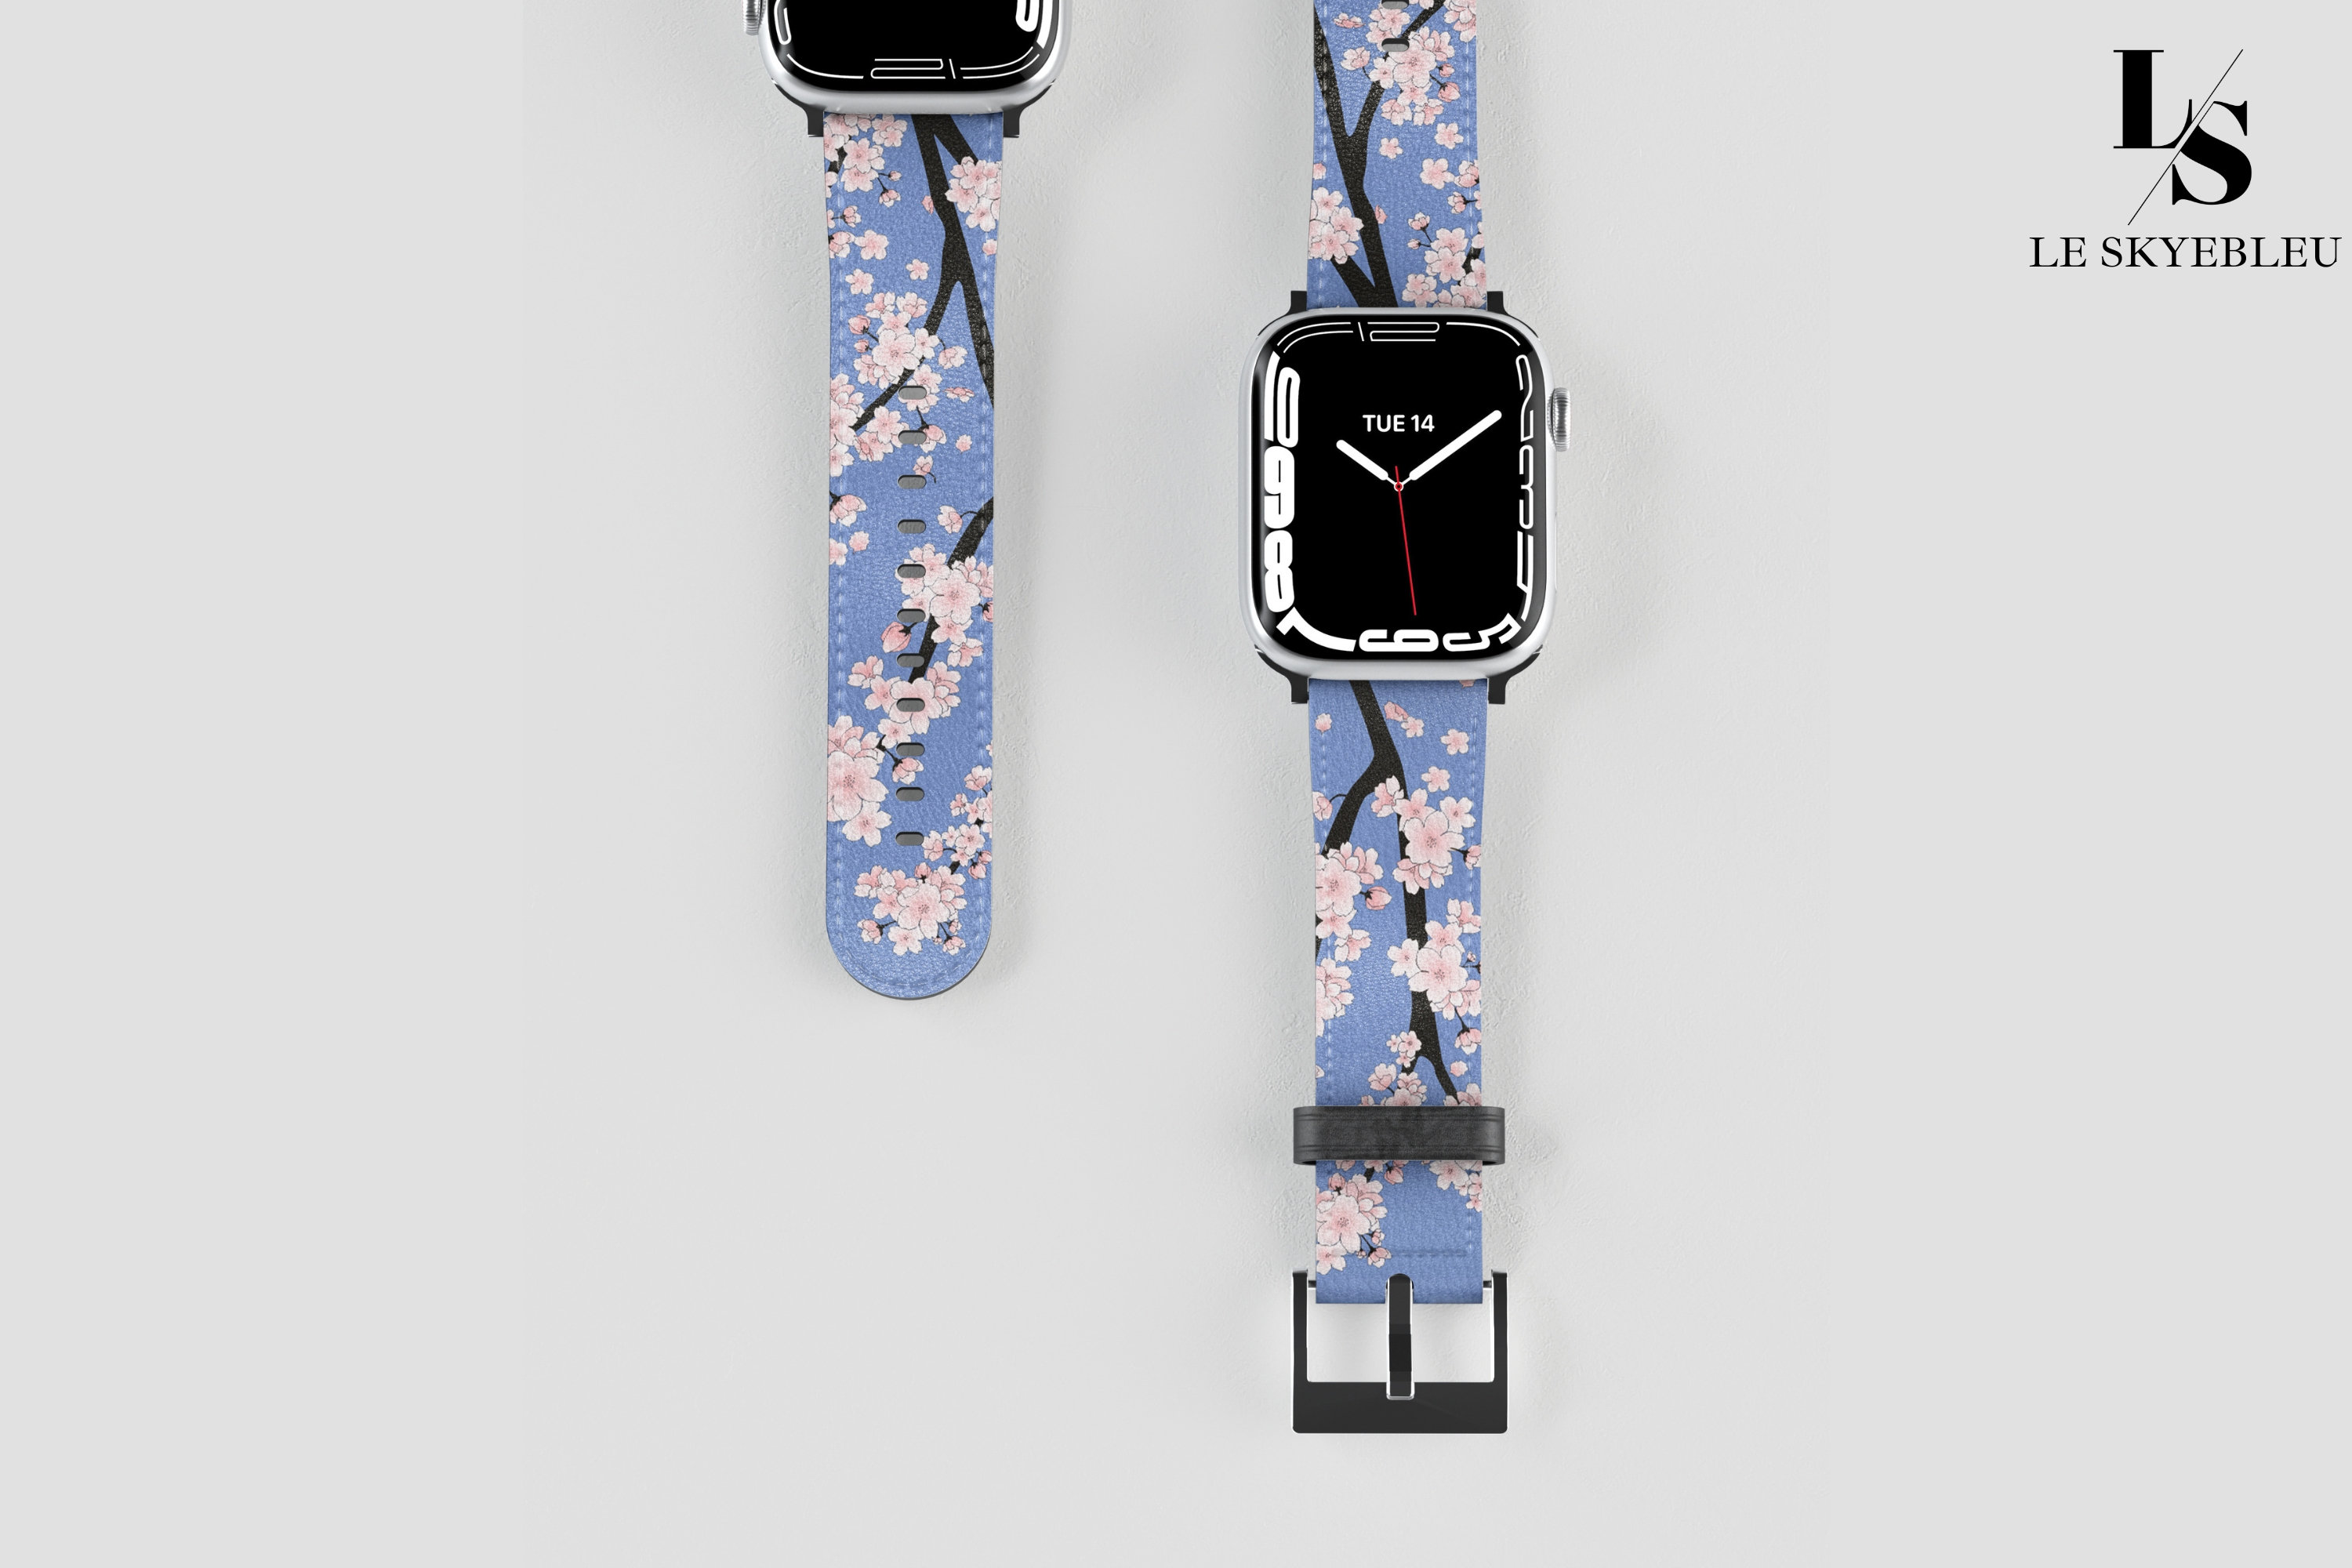 Japan Sakura 2 TPU Wrist Strap Apple Watch Band 38mm /42mm /44mm